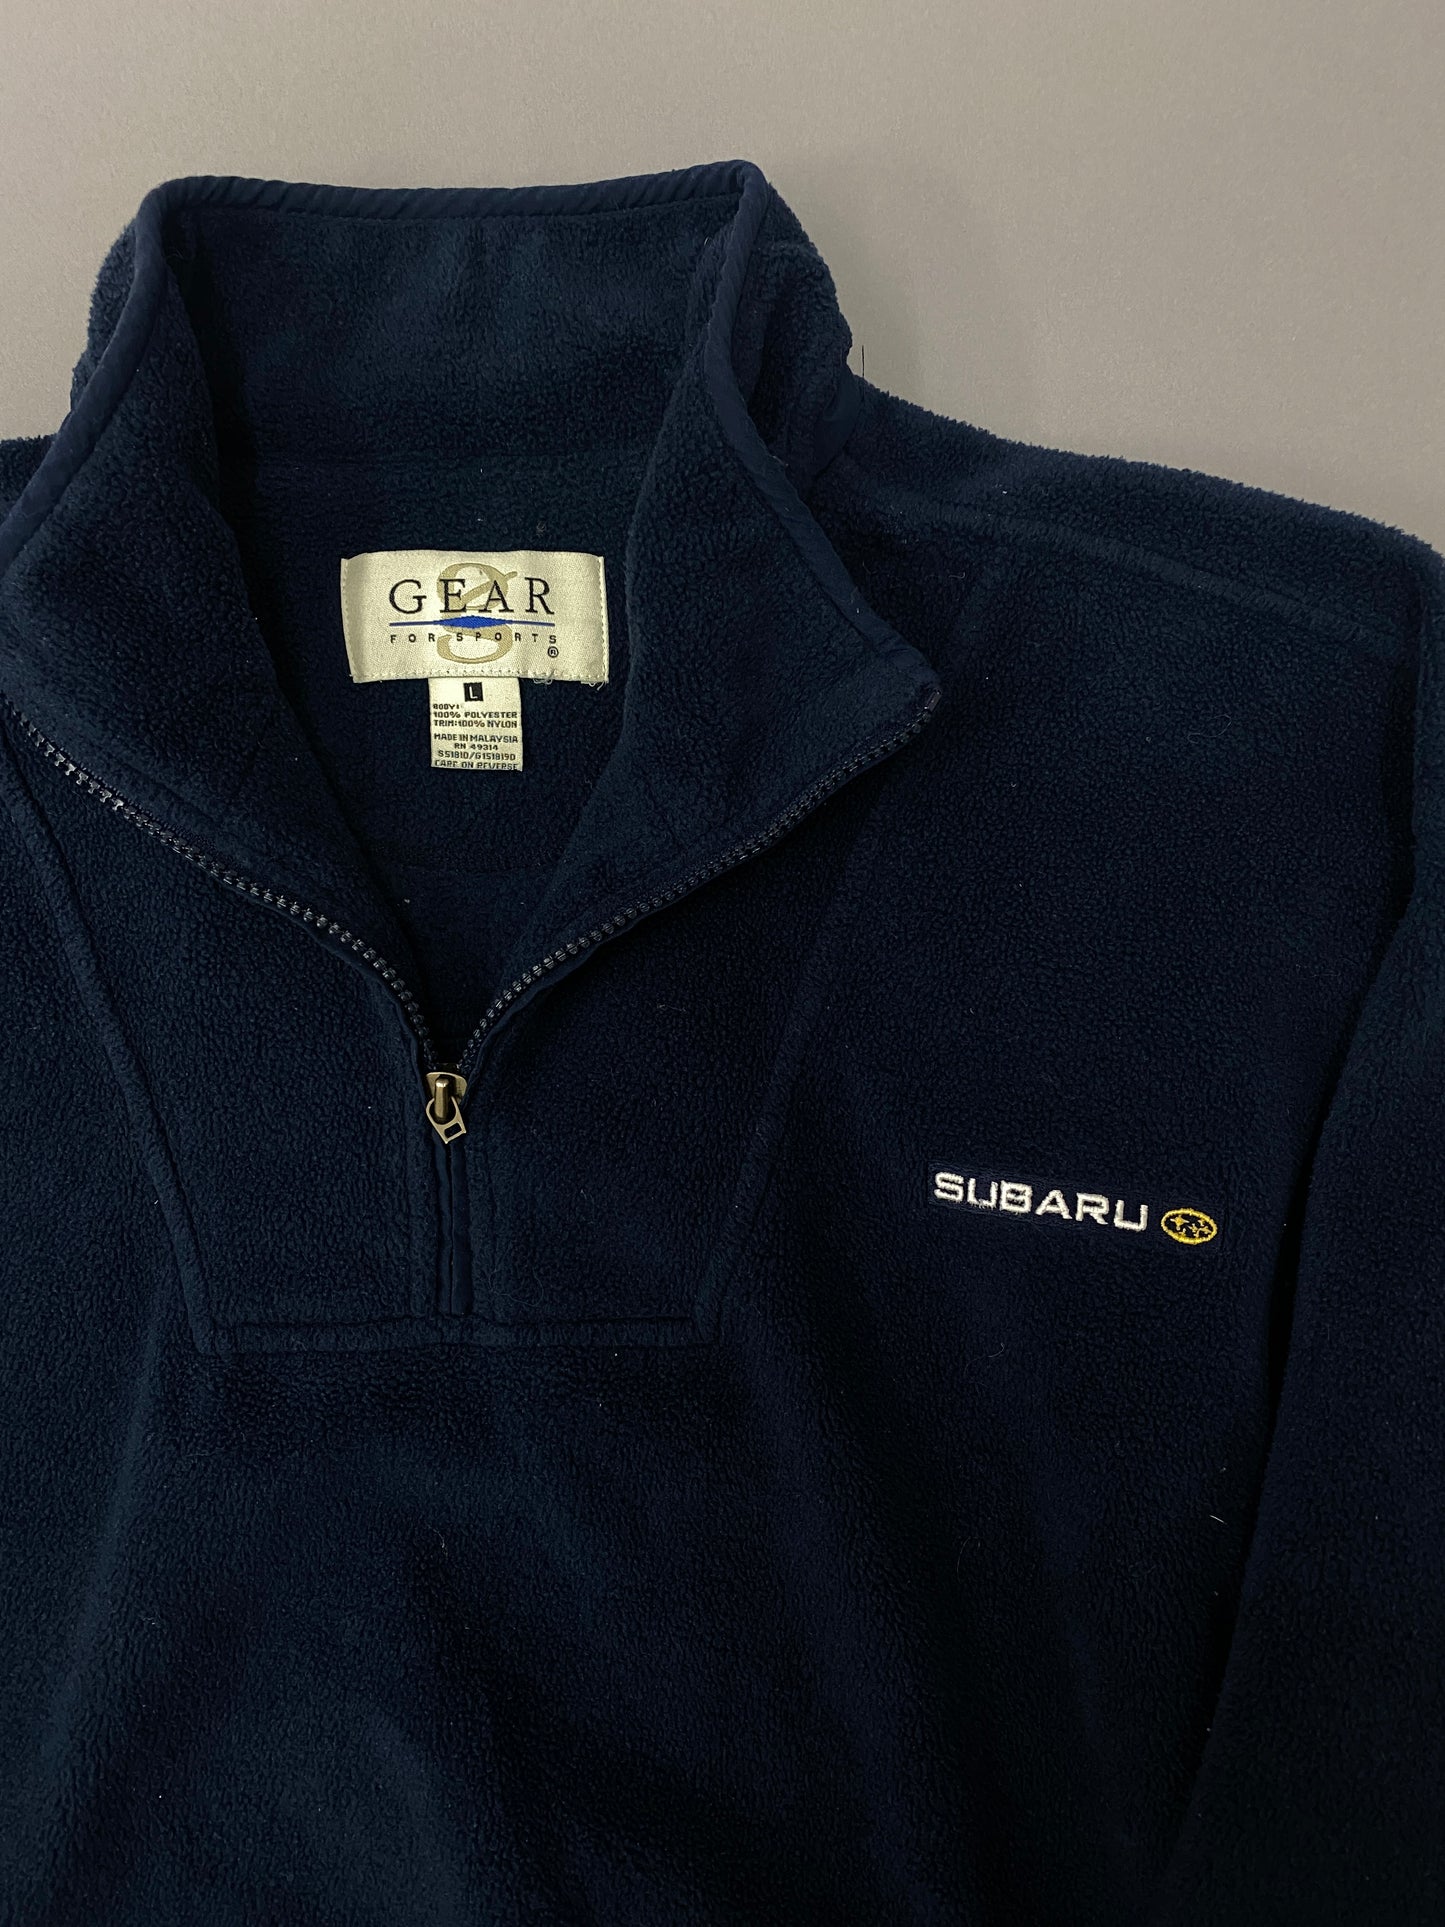 Vintage Subaru Sweatshirt